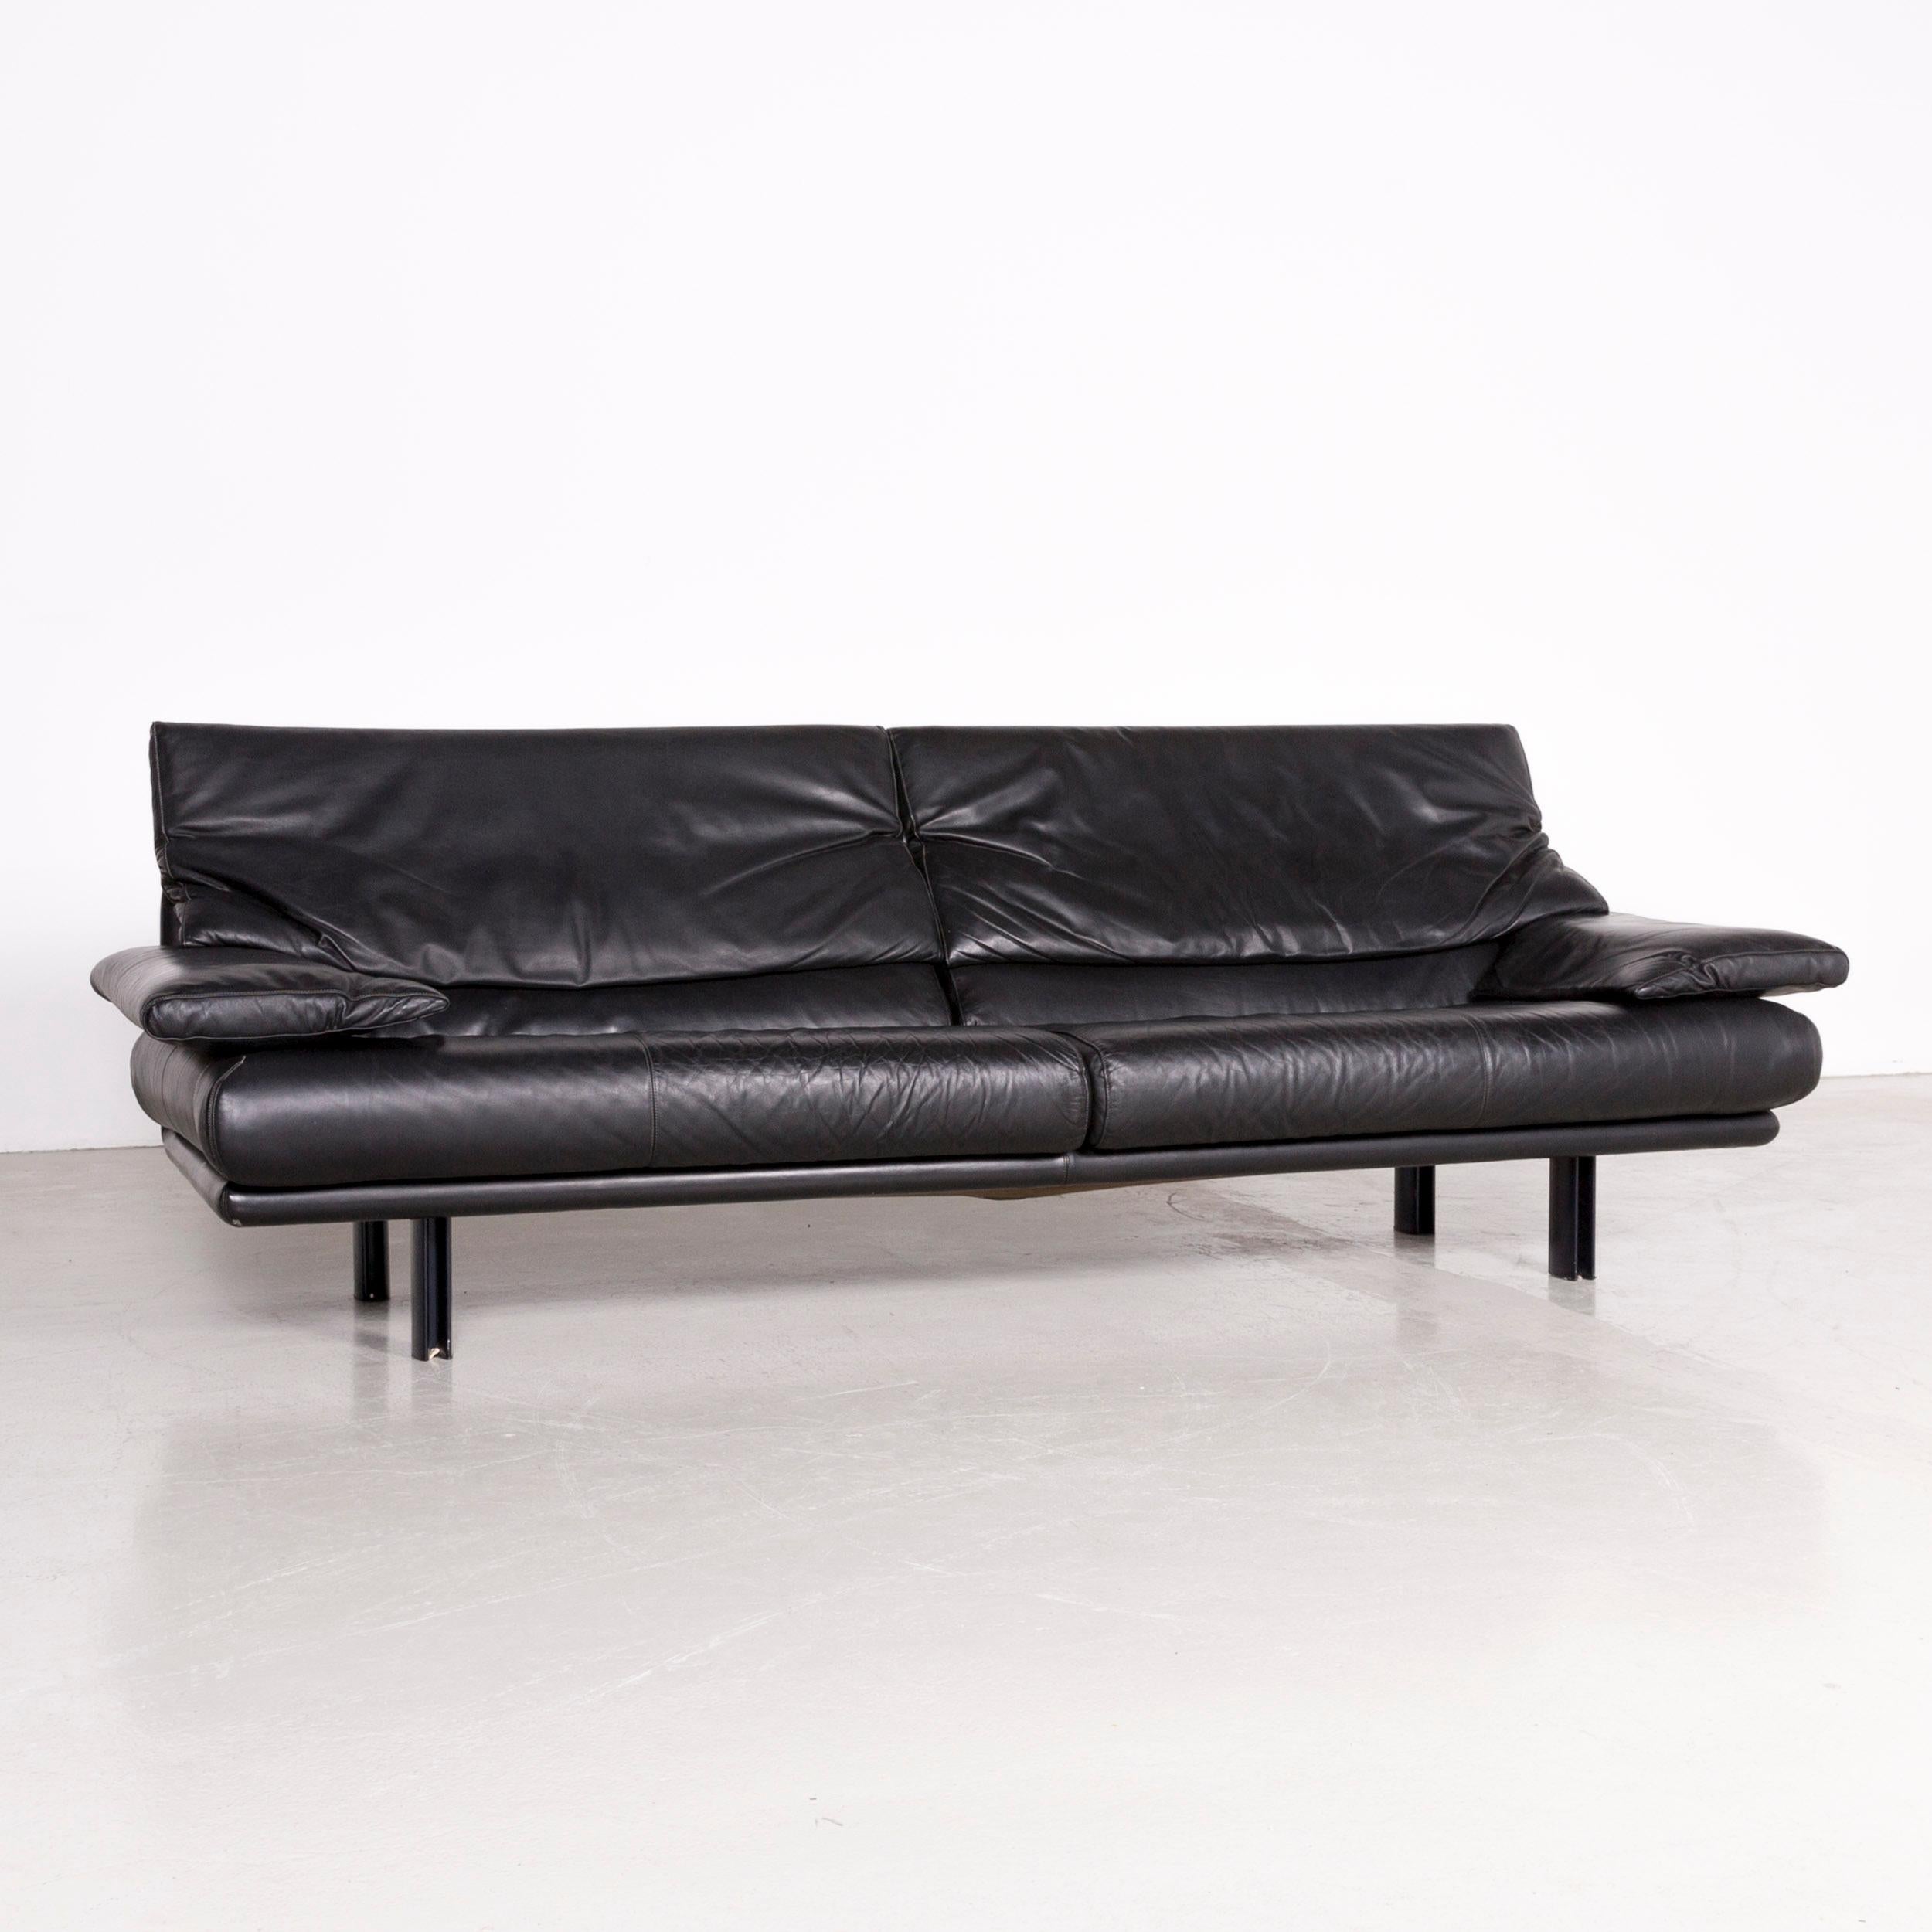 Modern B&B Italia Alanda Designer Leather Sofa Black Three-Seat Couch Relax For Sale